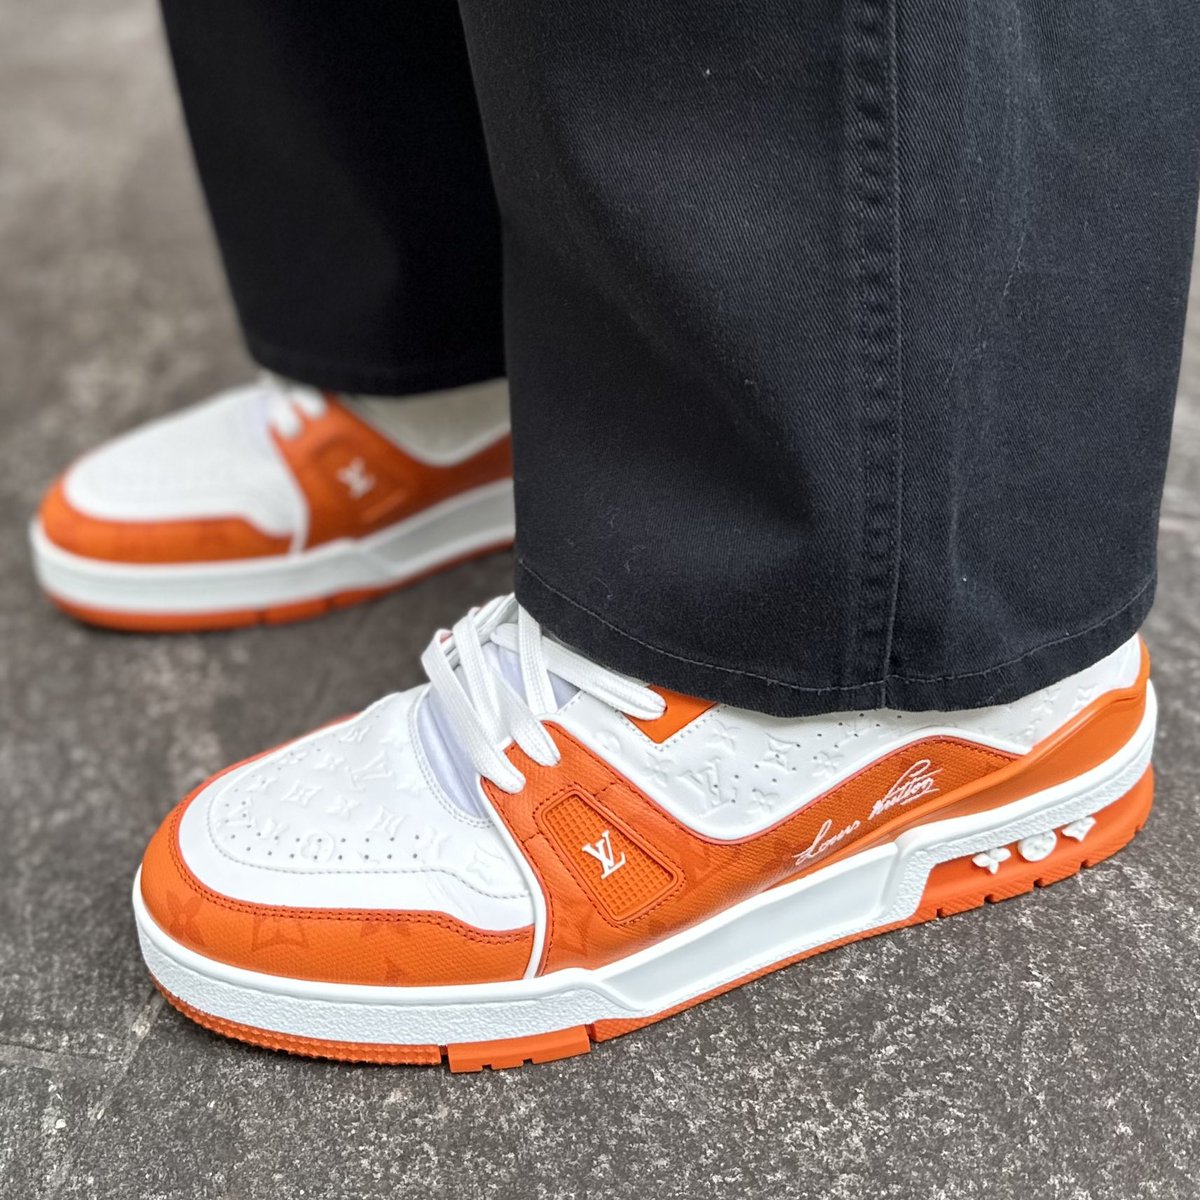 Today’s Kicks 👟🔥
Louis Vuitton LV Trainer Orange 🧡🔥
#LouisVuitton 
#LVTrainer
#LVSneaker
#LVShoes
#LVMen
#Sneaker
#ルイヴィトン
#スニーカー
instagram.com/p/C1ON5QQP9xQ/…